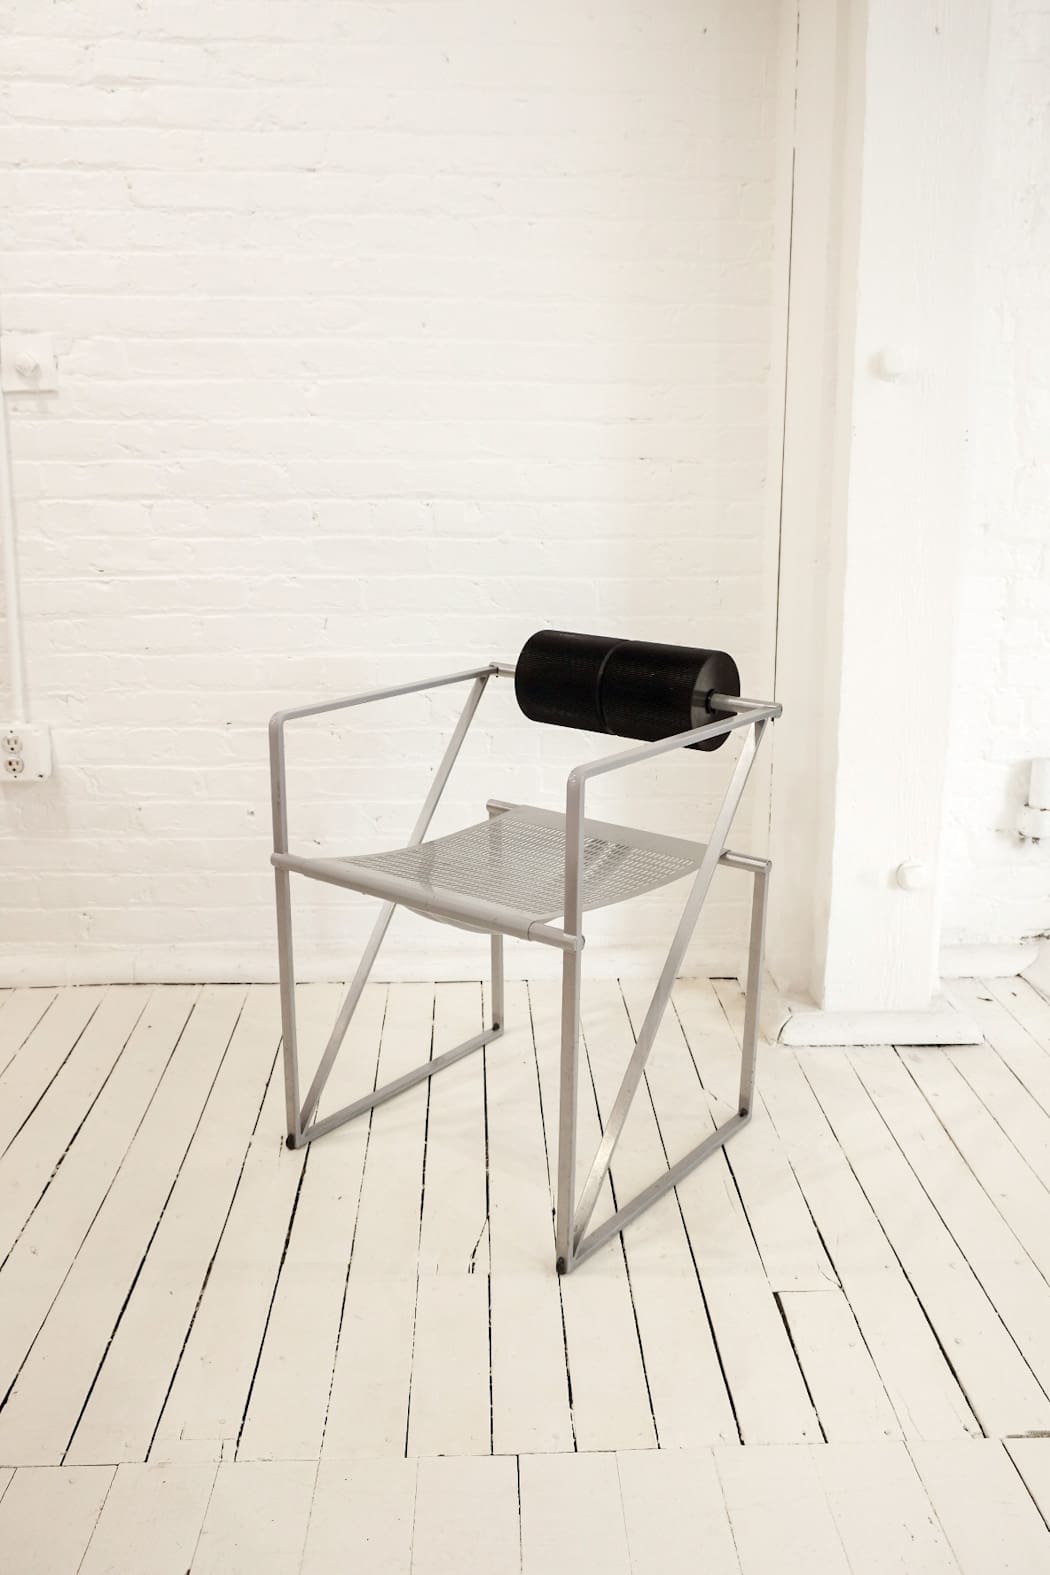 Seconda Chair by Mario Botta for Alias